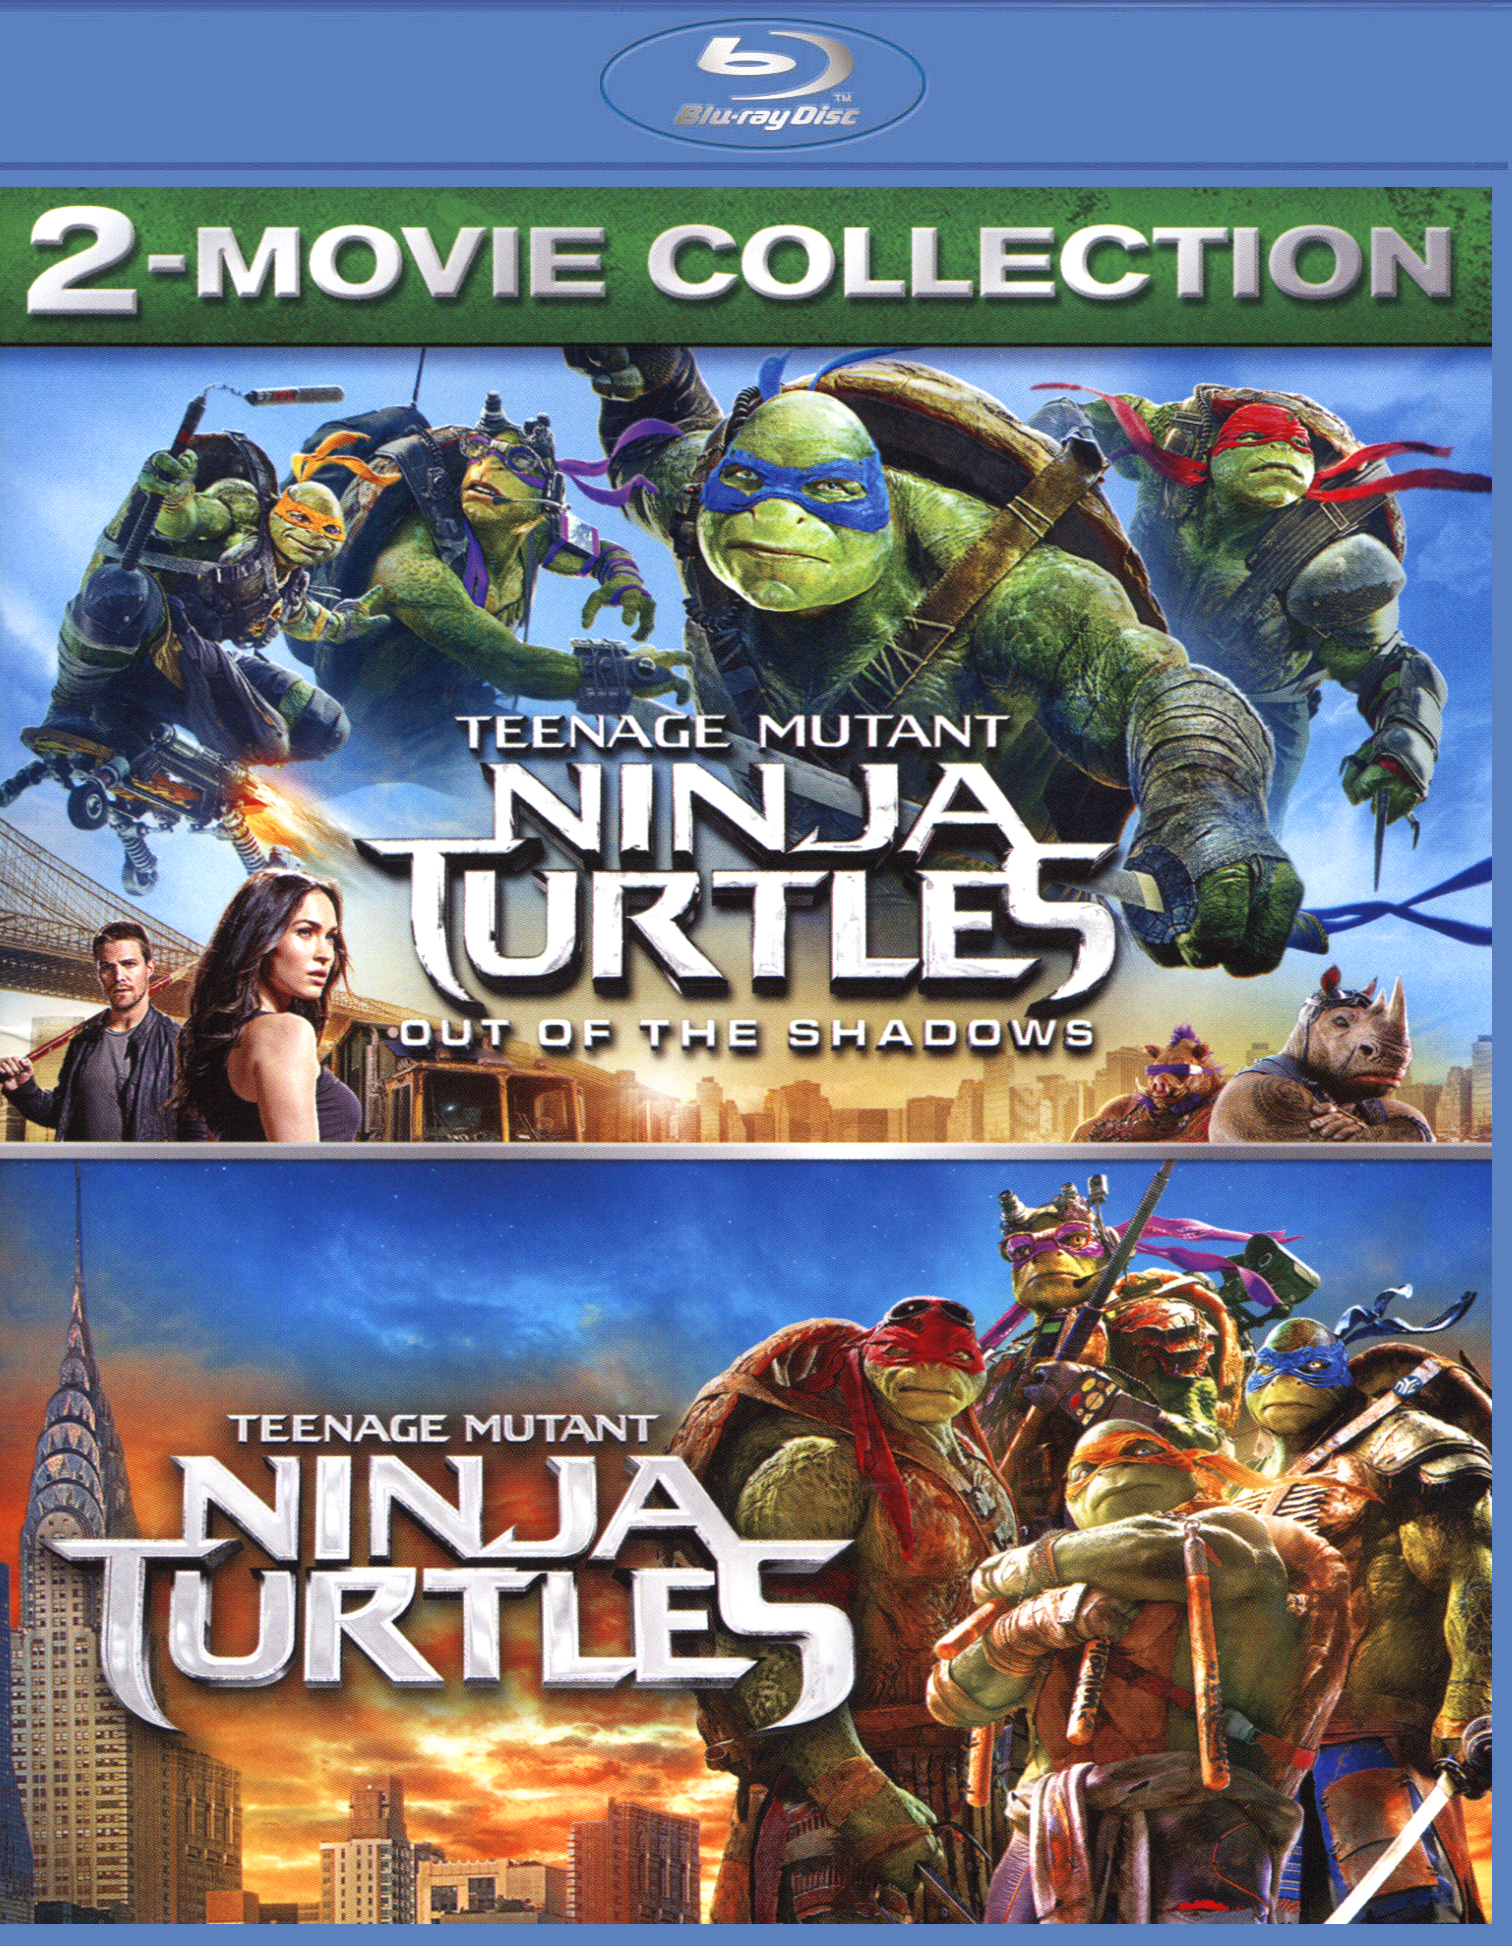 Best Buy: A Turtle's Tale: Sammy's Adventures [2 Discs] [Blu-ray